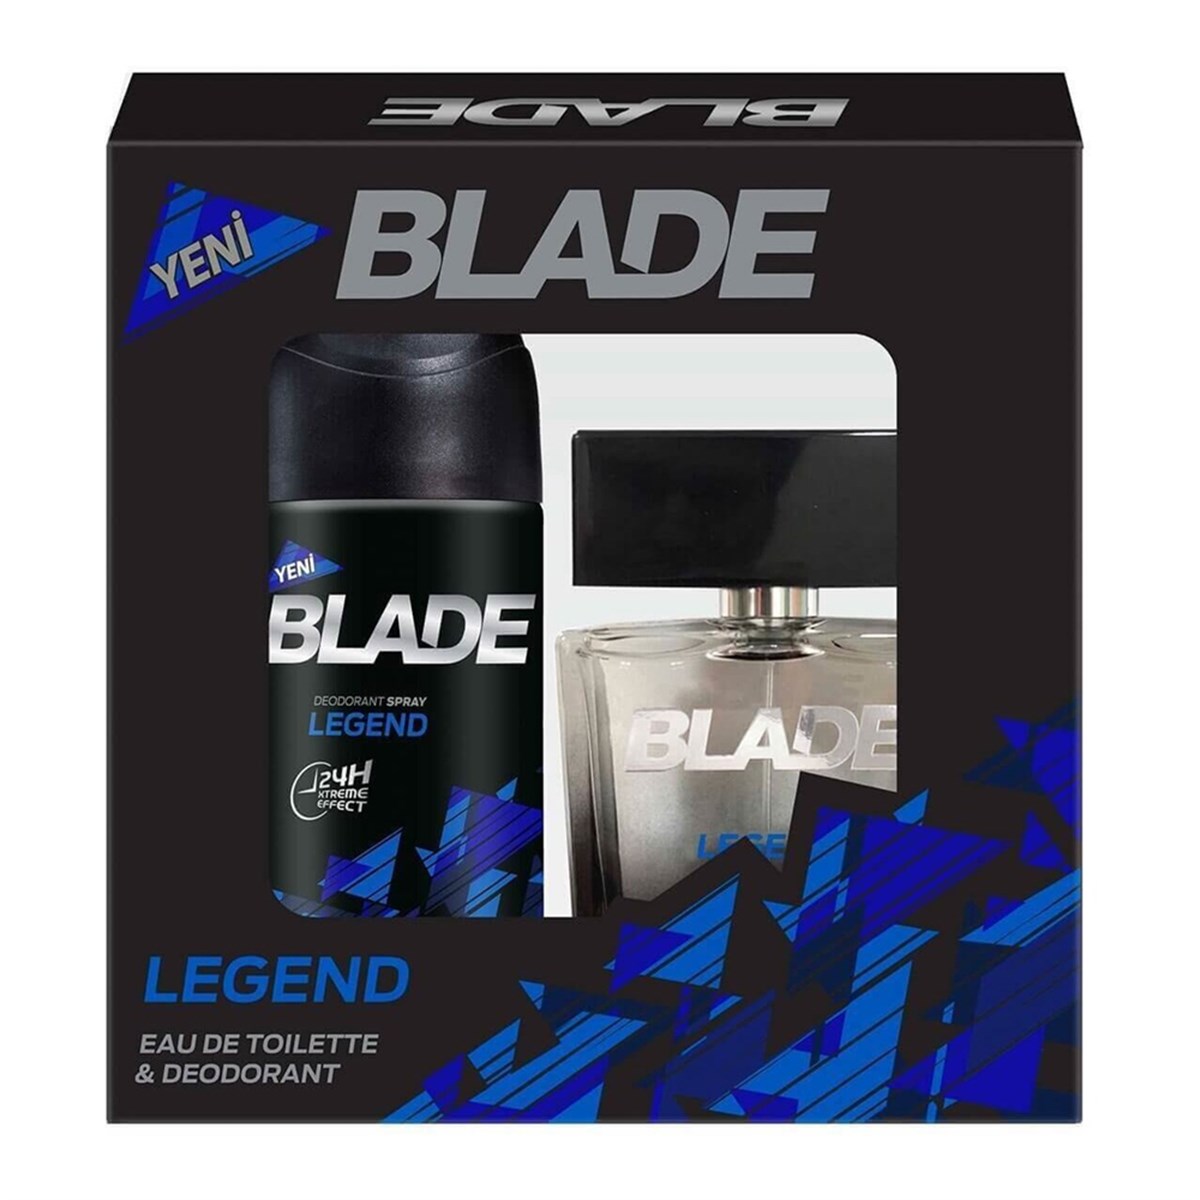 Blade Legend Erkek Parfüm 100ml + Blade Legend Deodorant 150ml - Platin